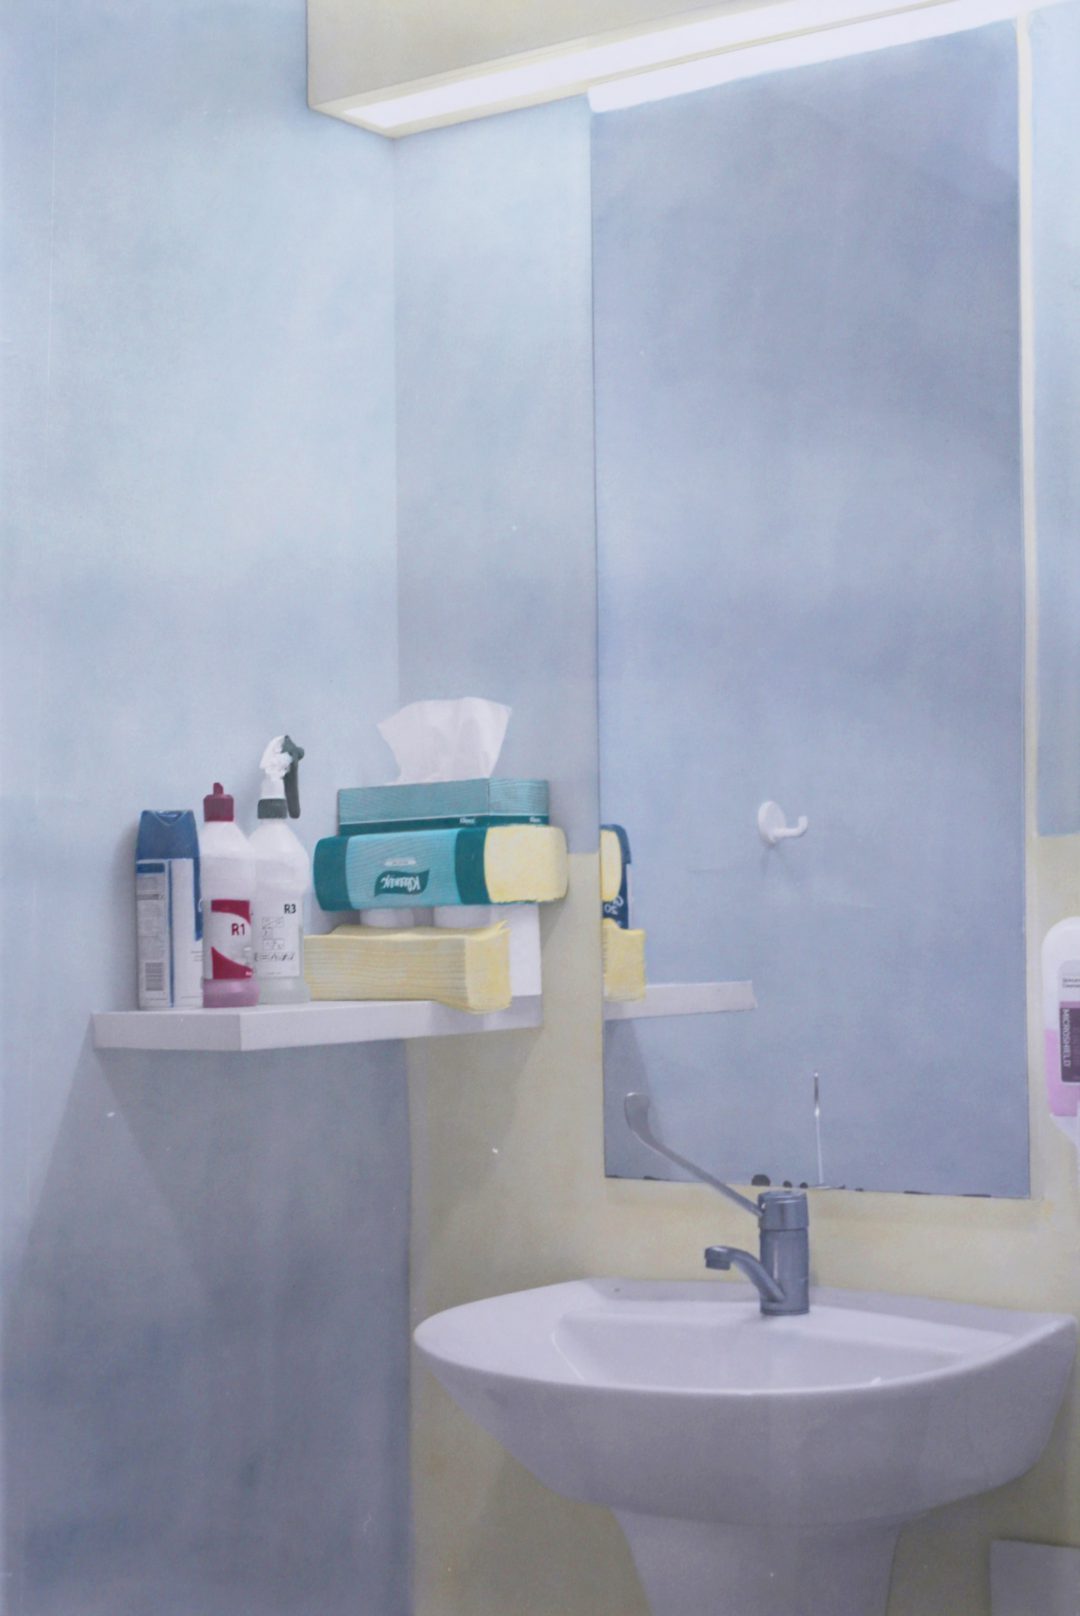 Georgie Mattingley, Toilet still life 2017
oil on silver gelatin print, DiBond
120 x 90 cm
Winner of the 2018 Local Art Prize
